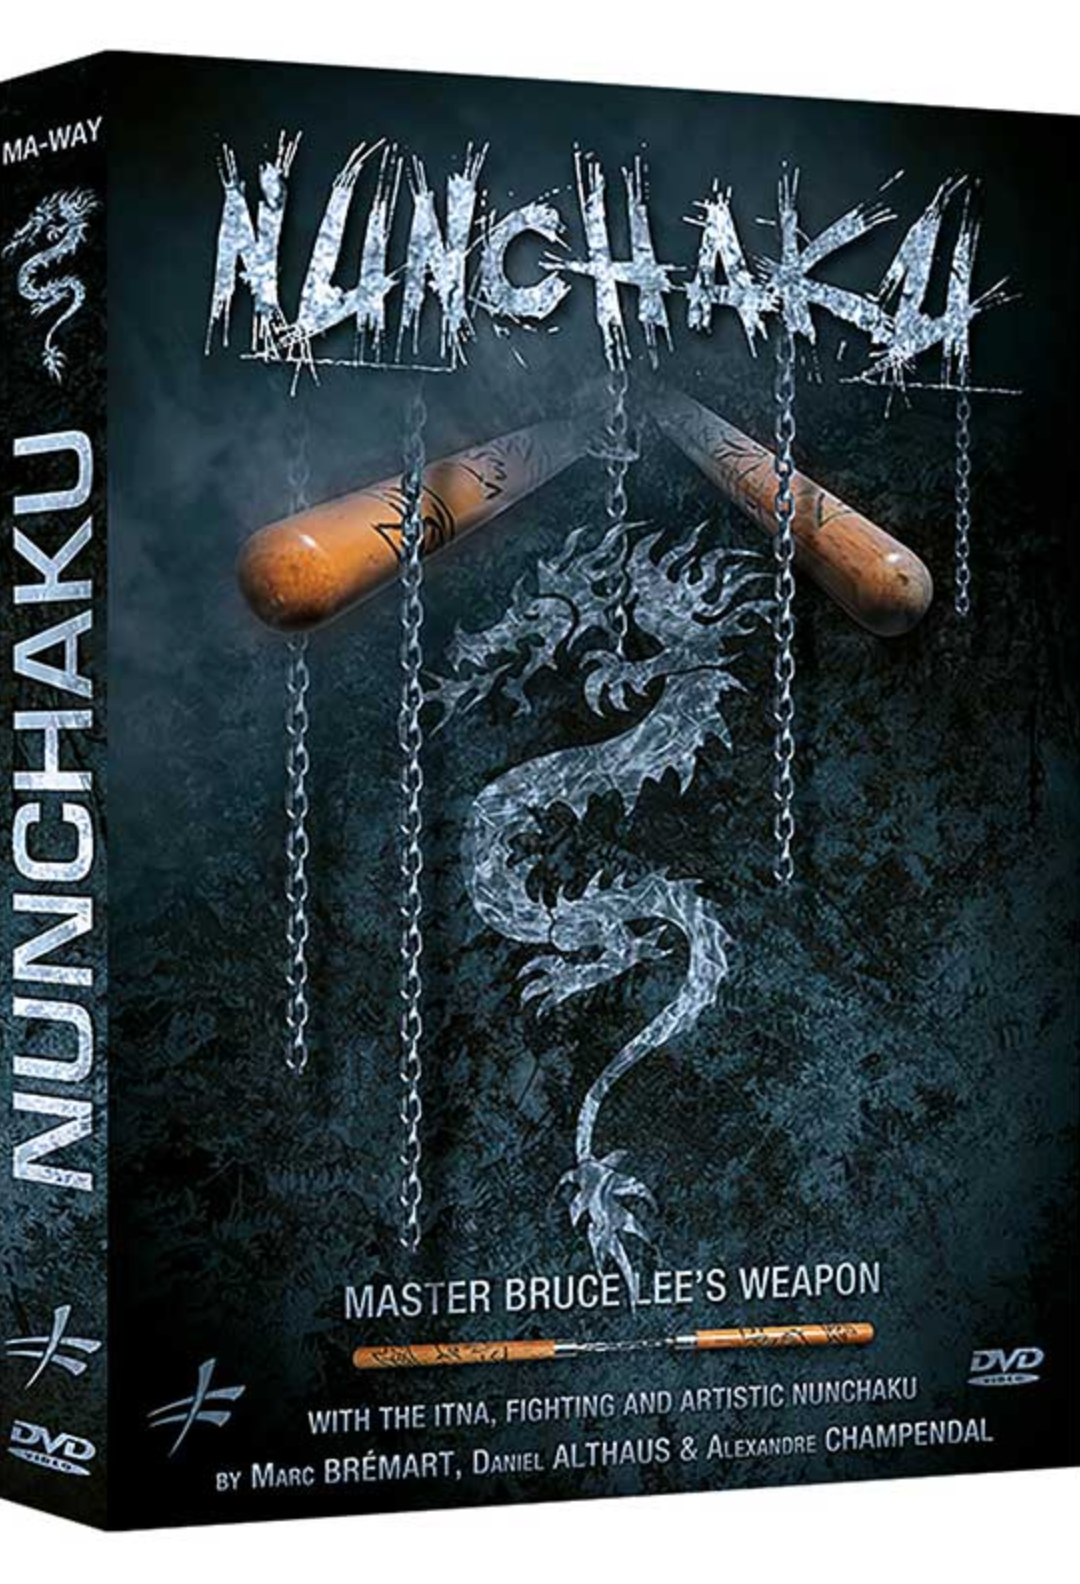 Nunchaku - Master Bruce Lee's Weapon DVD